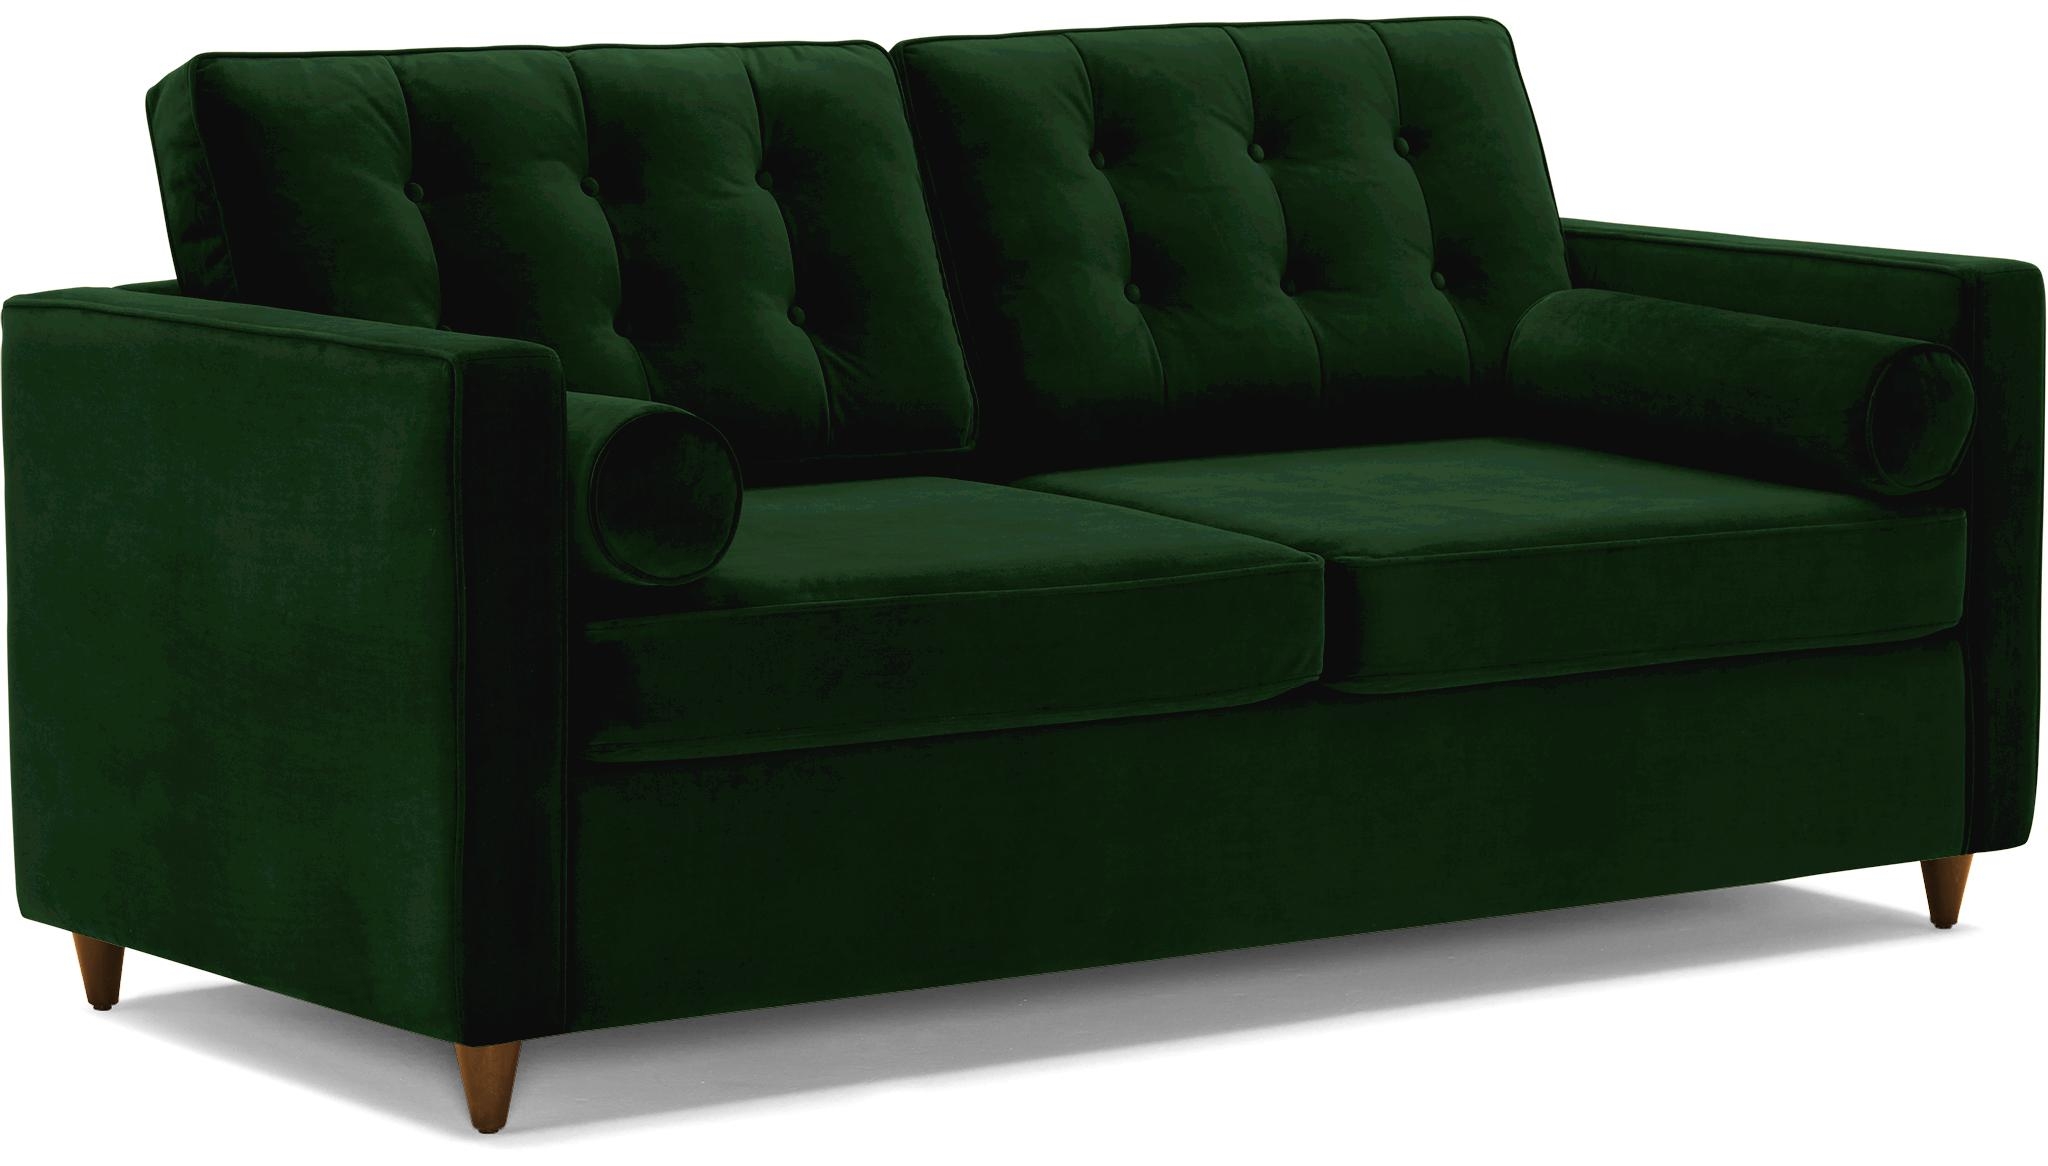 Green Braxton Mid Century Modern Sleeper Sofa - Royale Evergreen - Mocha - Image 1